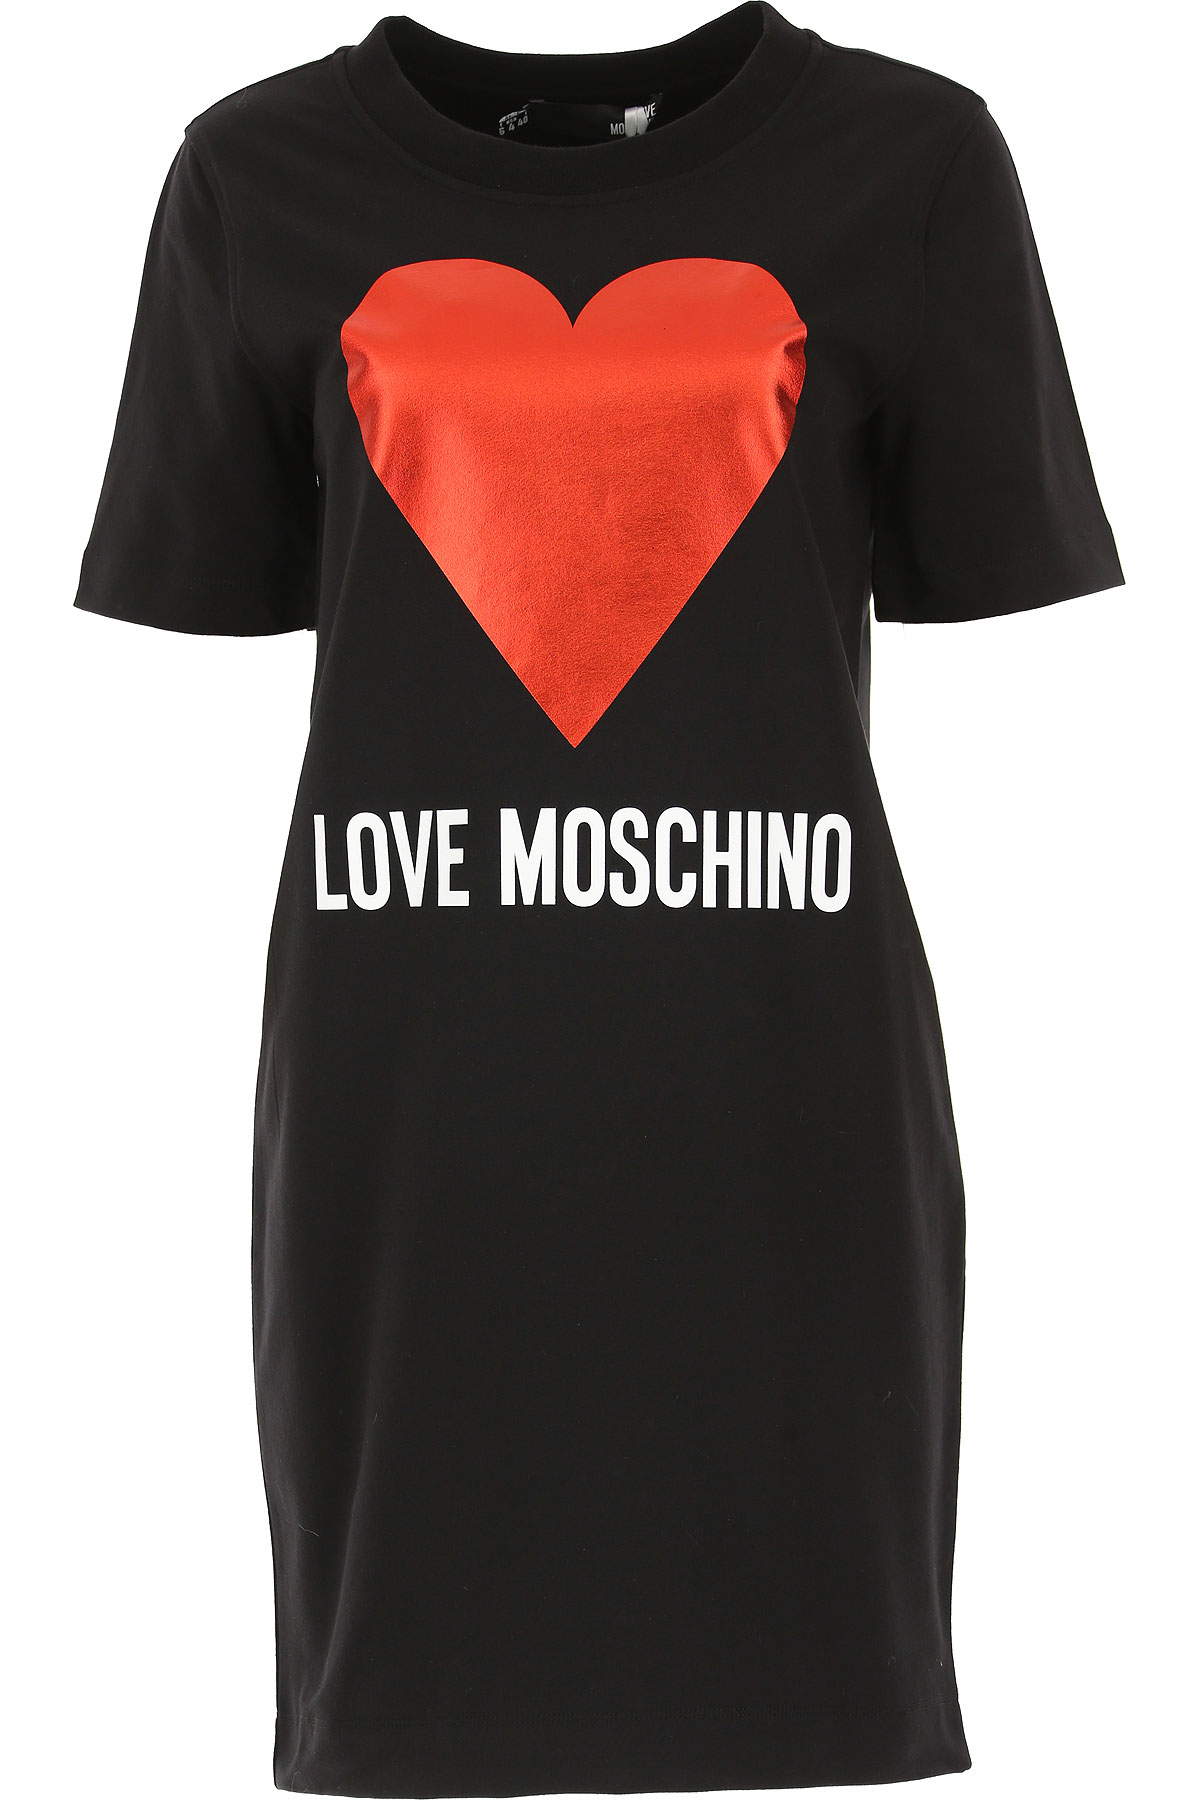 Москино одежда. Платье Moschino. Moschino платье черное. Love Moschino одежда. Черное платье Москино.